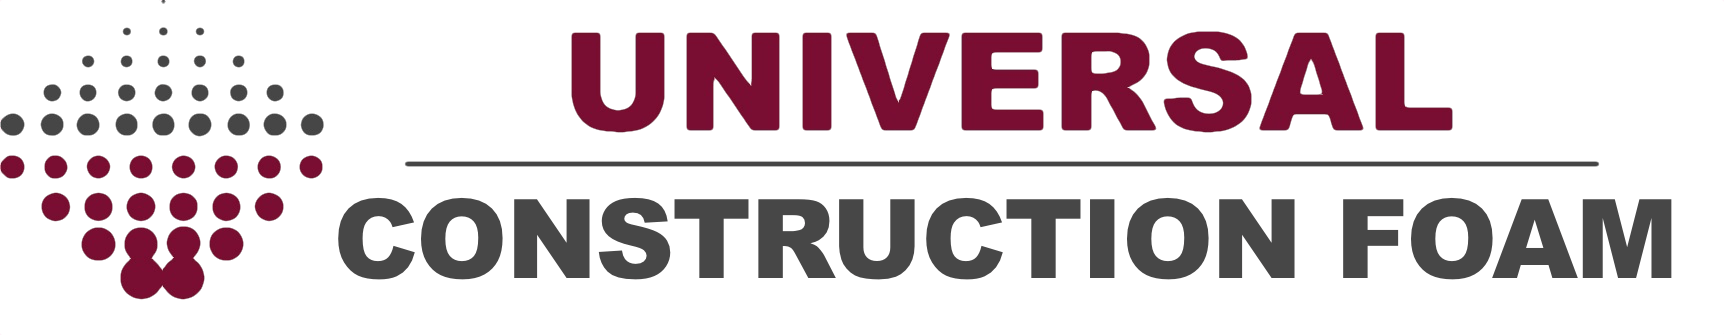 Universal Construction Foam Logo